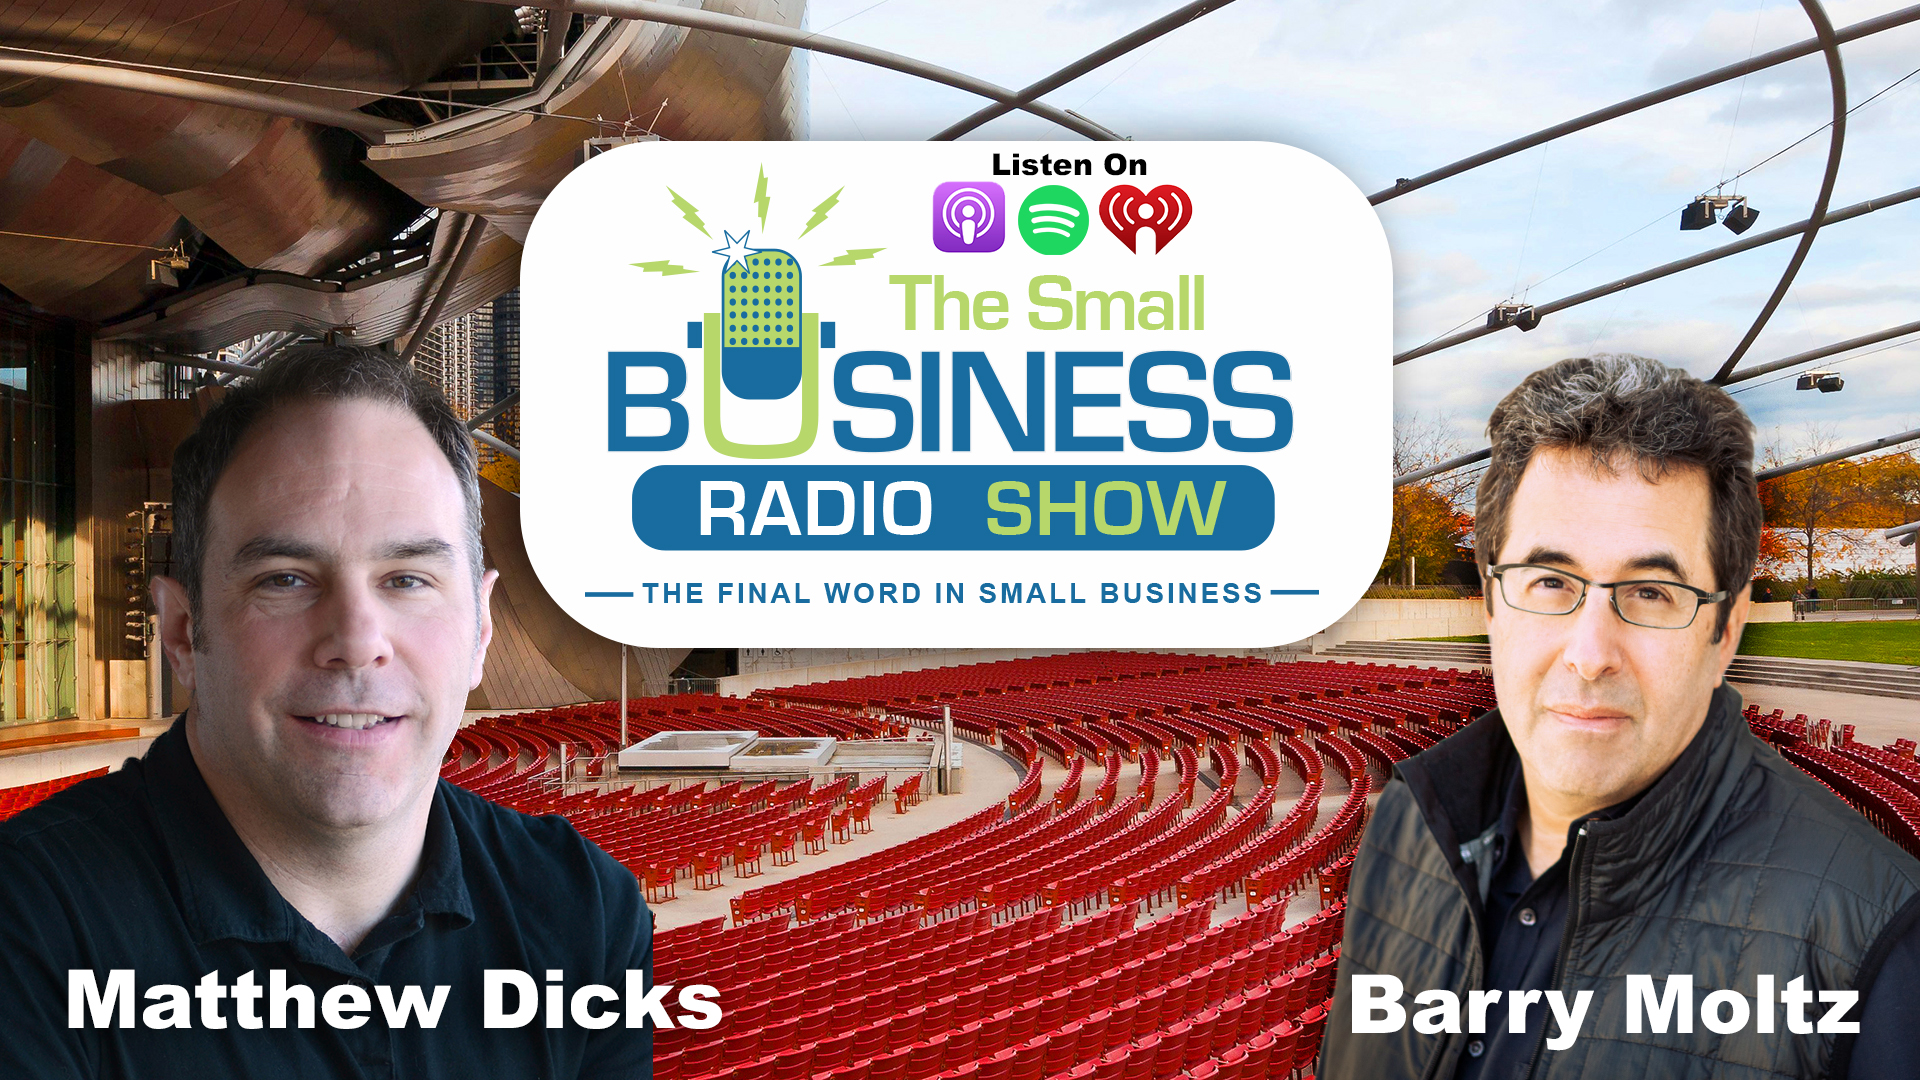 Matthew Dicks on The Small Business Radio Show